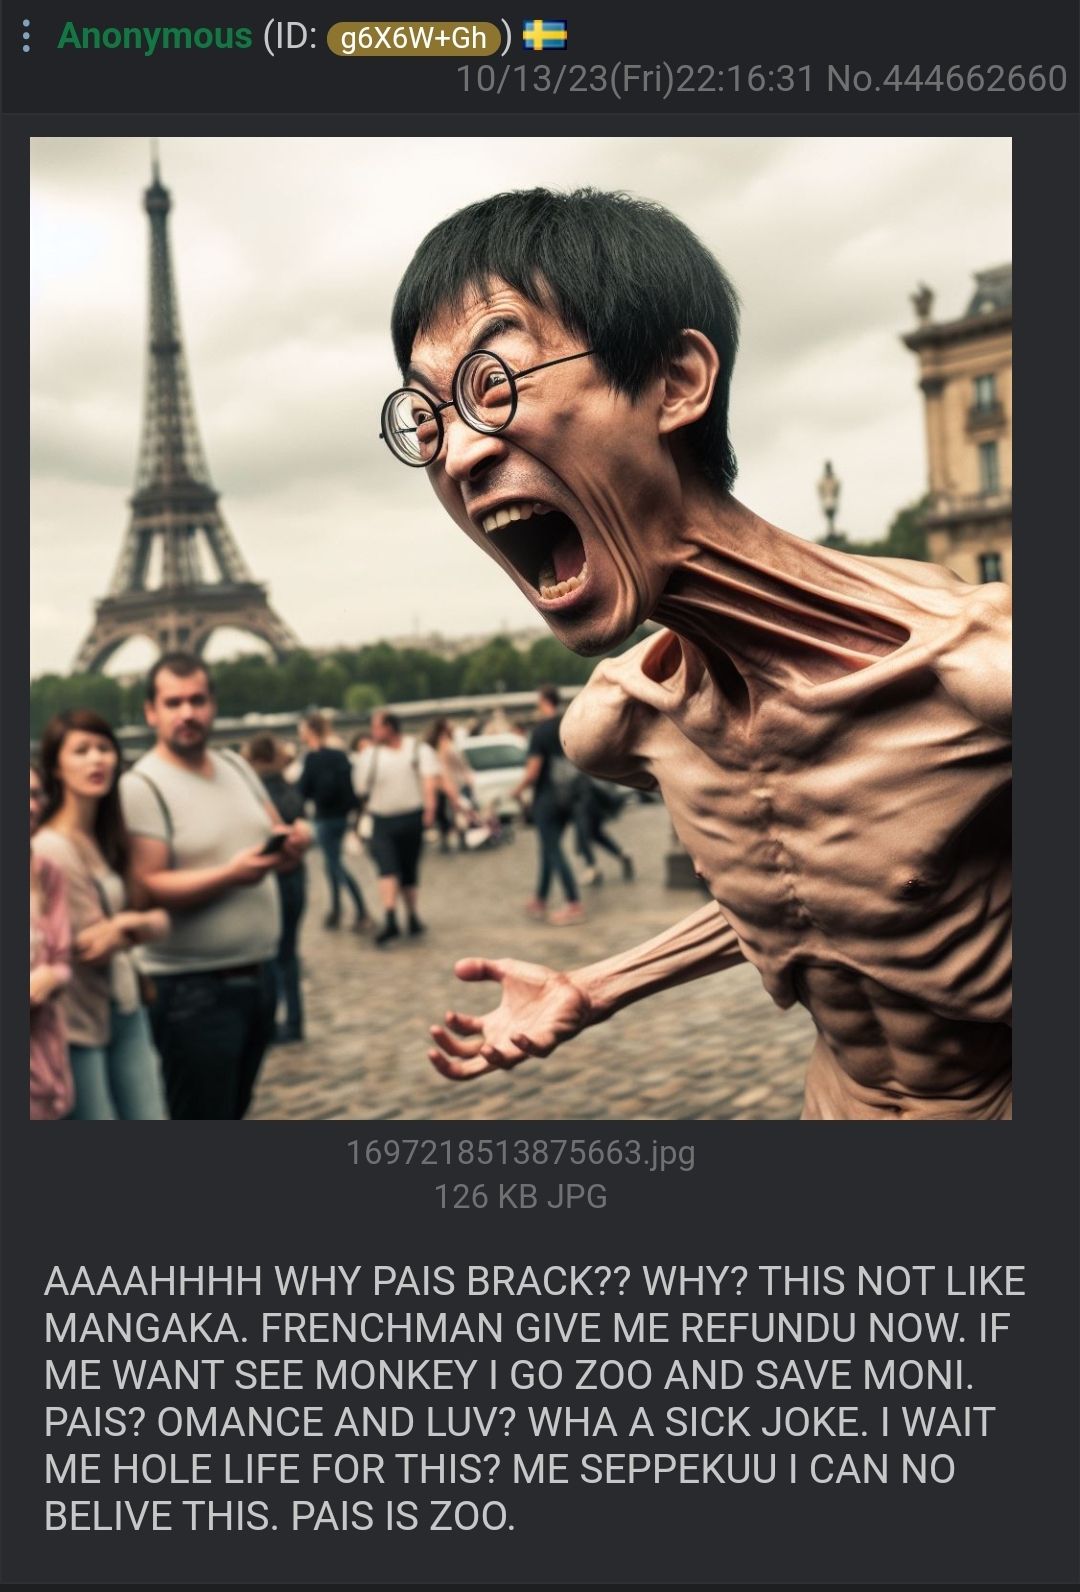 Paris syndrome